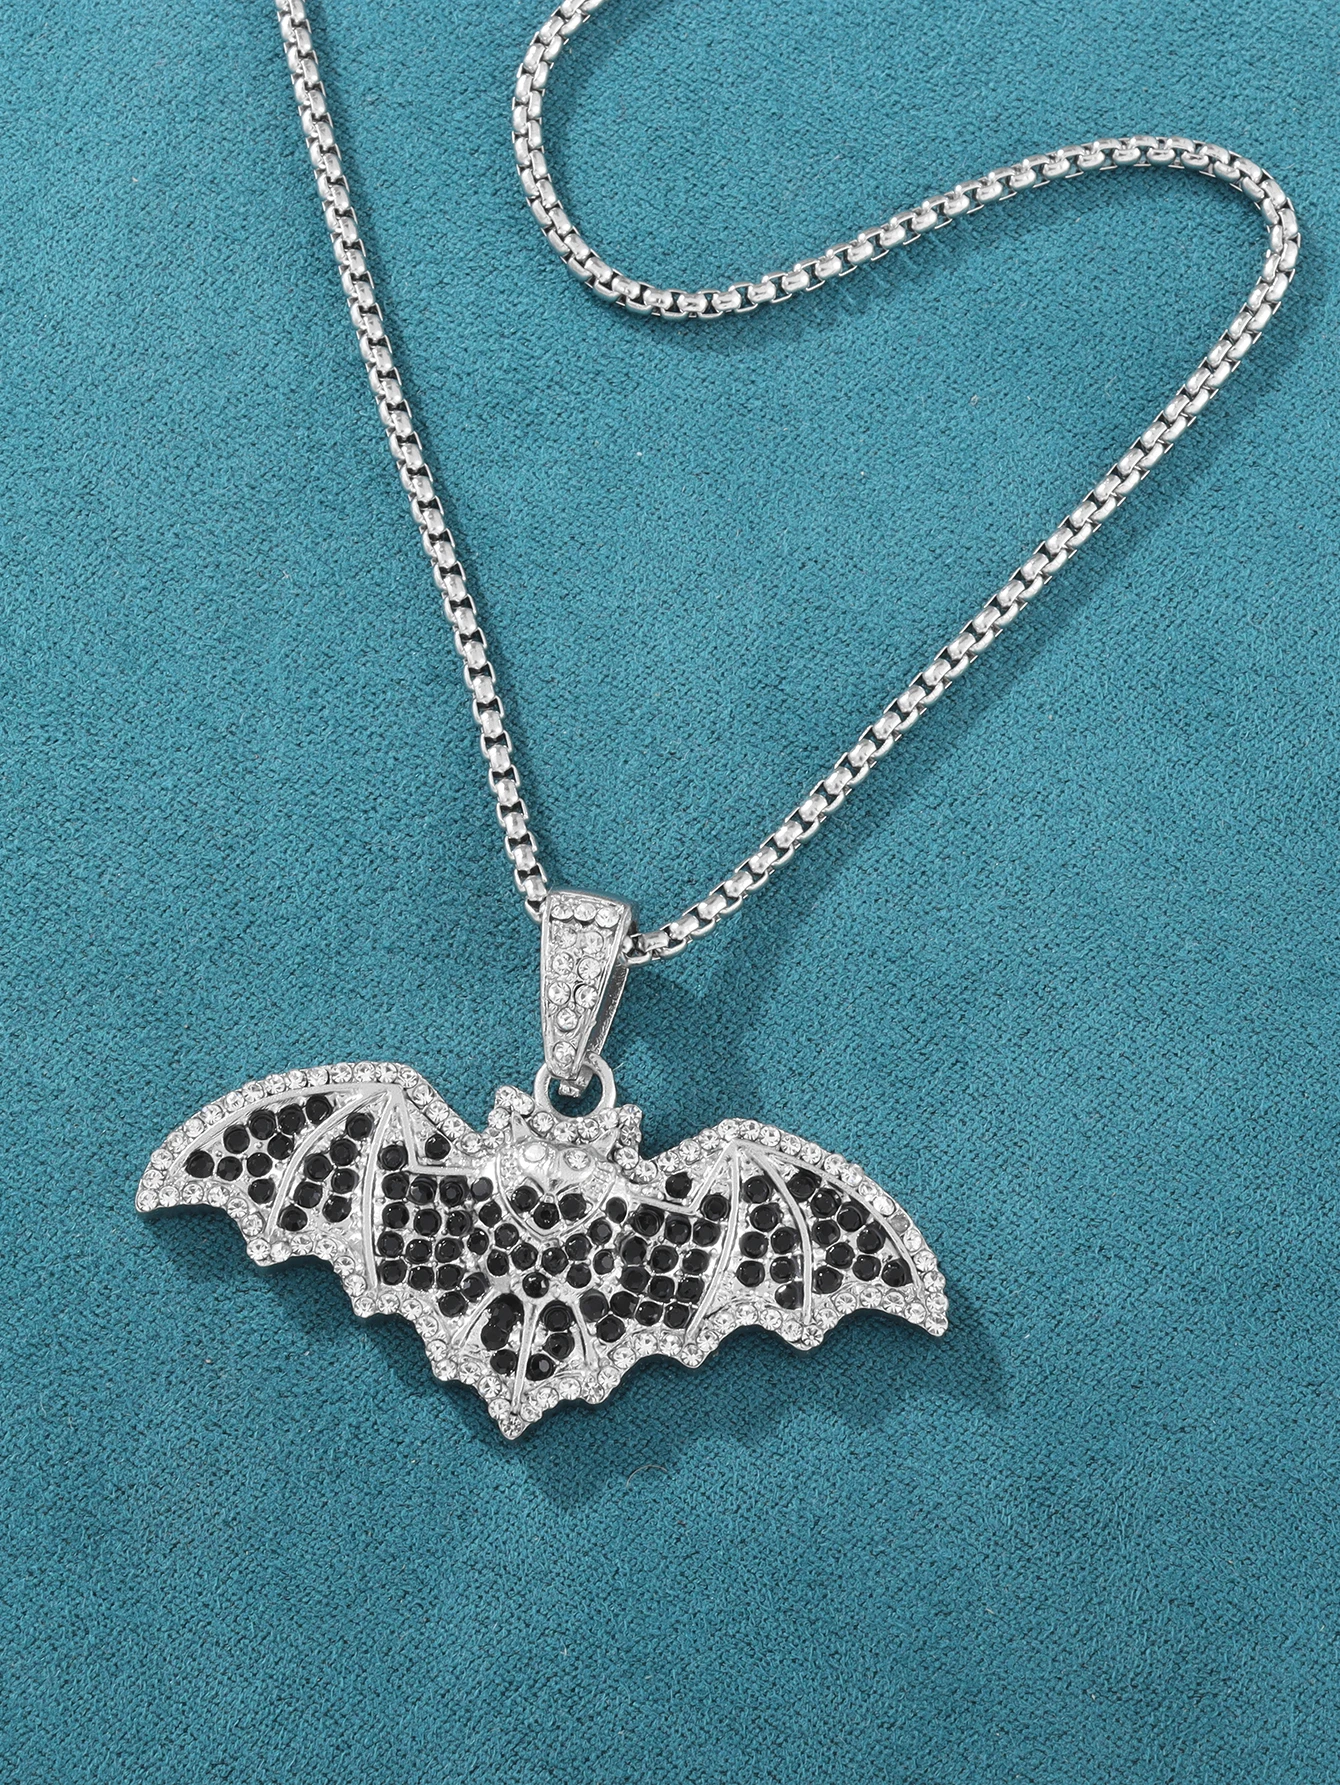 

Vintage Exquisite Shiny Inlaid Zircon Bat Pendant Necklace Men Women Hip Hop Trend Party Jewelry Gifts